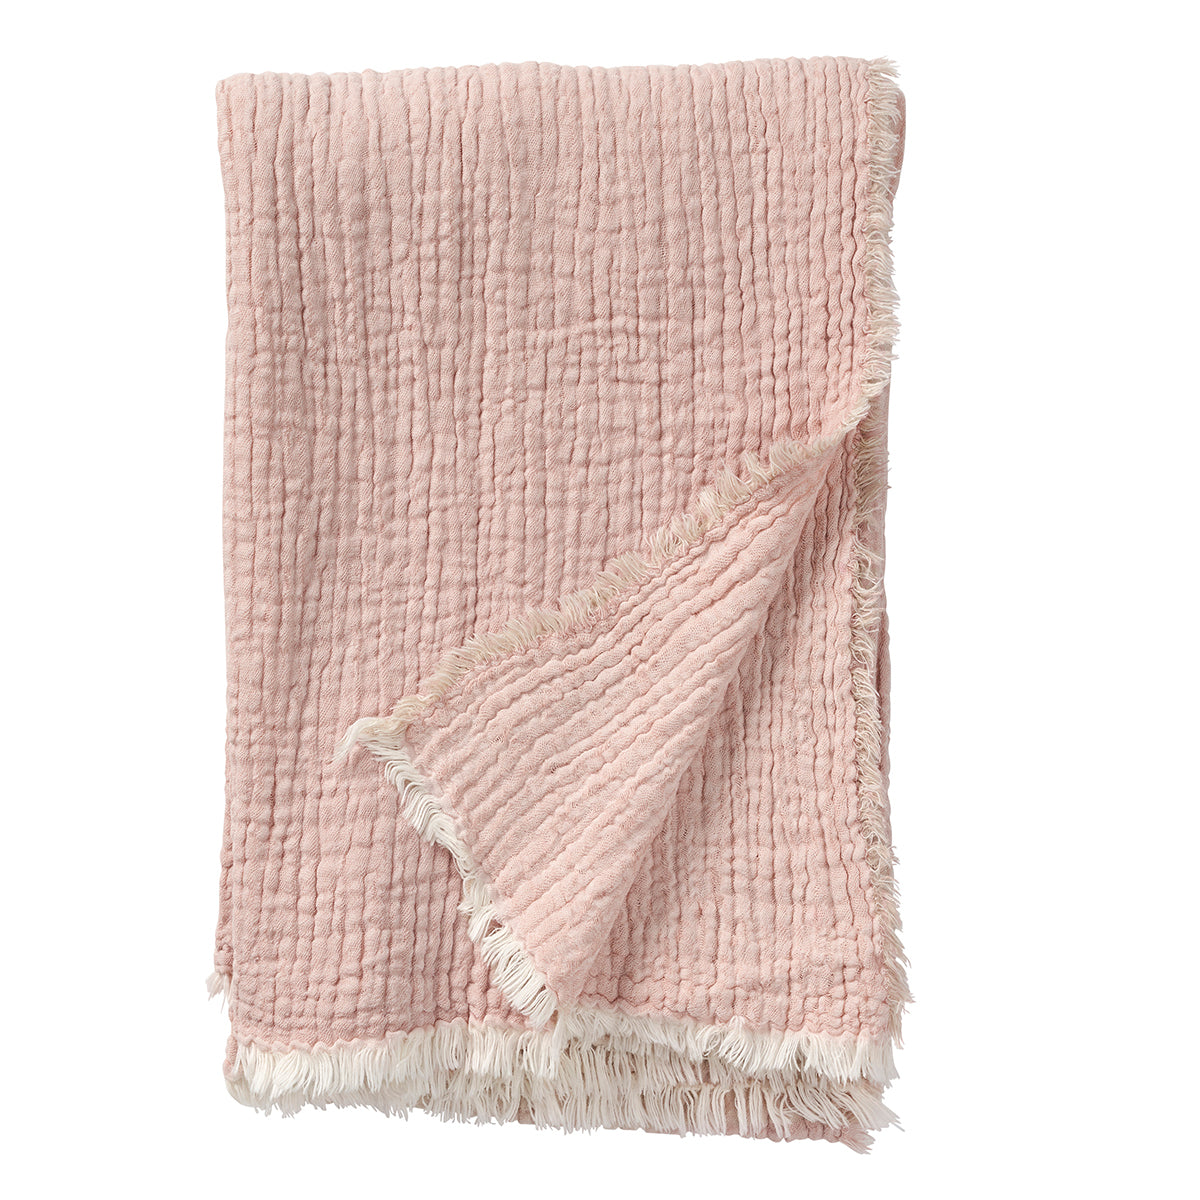 Duo Pink 130x170cm Organic Cotton/Linen Blanket